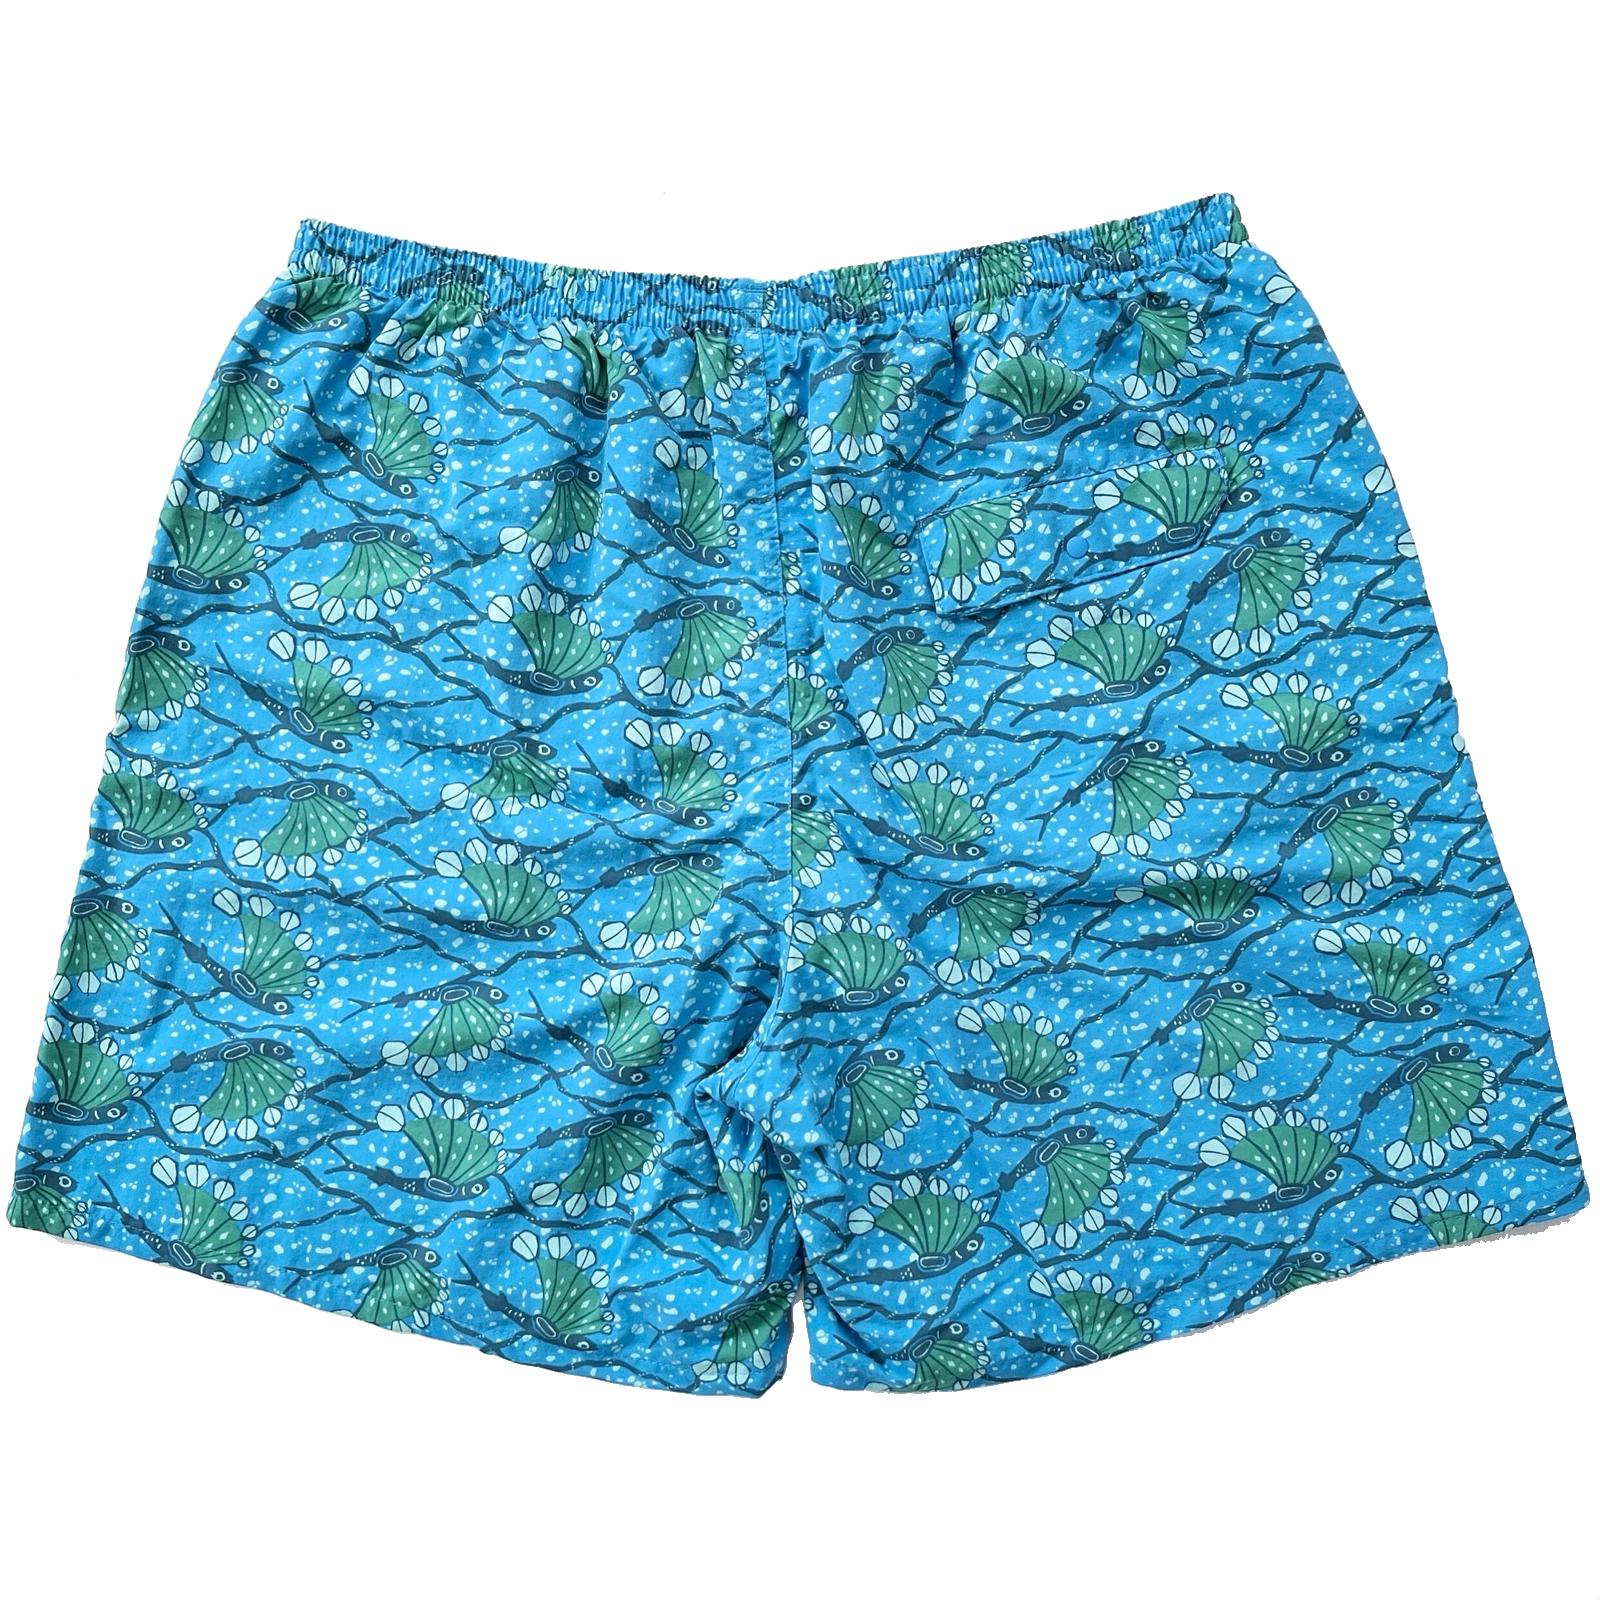 2018 Patagonia Mens 7” Baggies Shorts, Hexy Fish: Radar Blue (L)